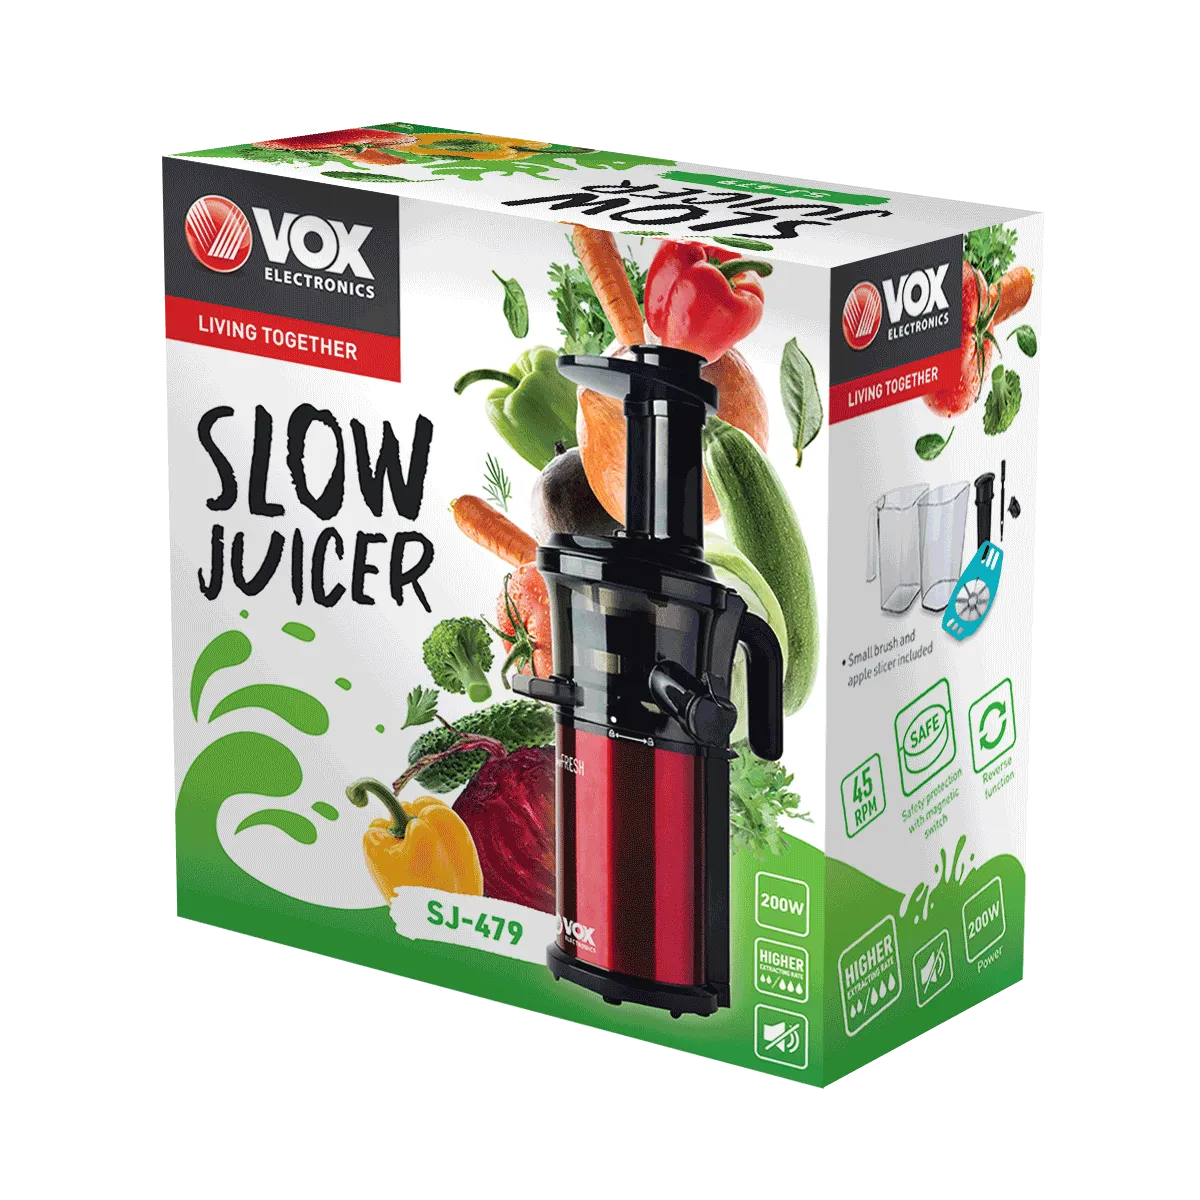 Slow juicer SJ479 